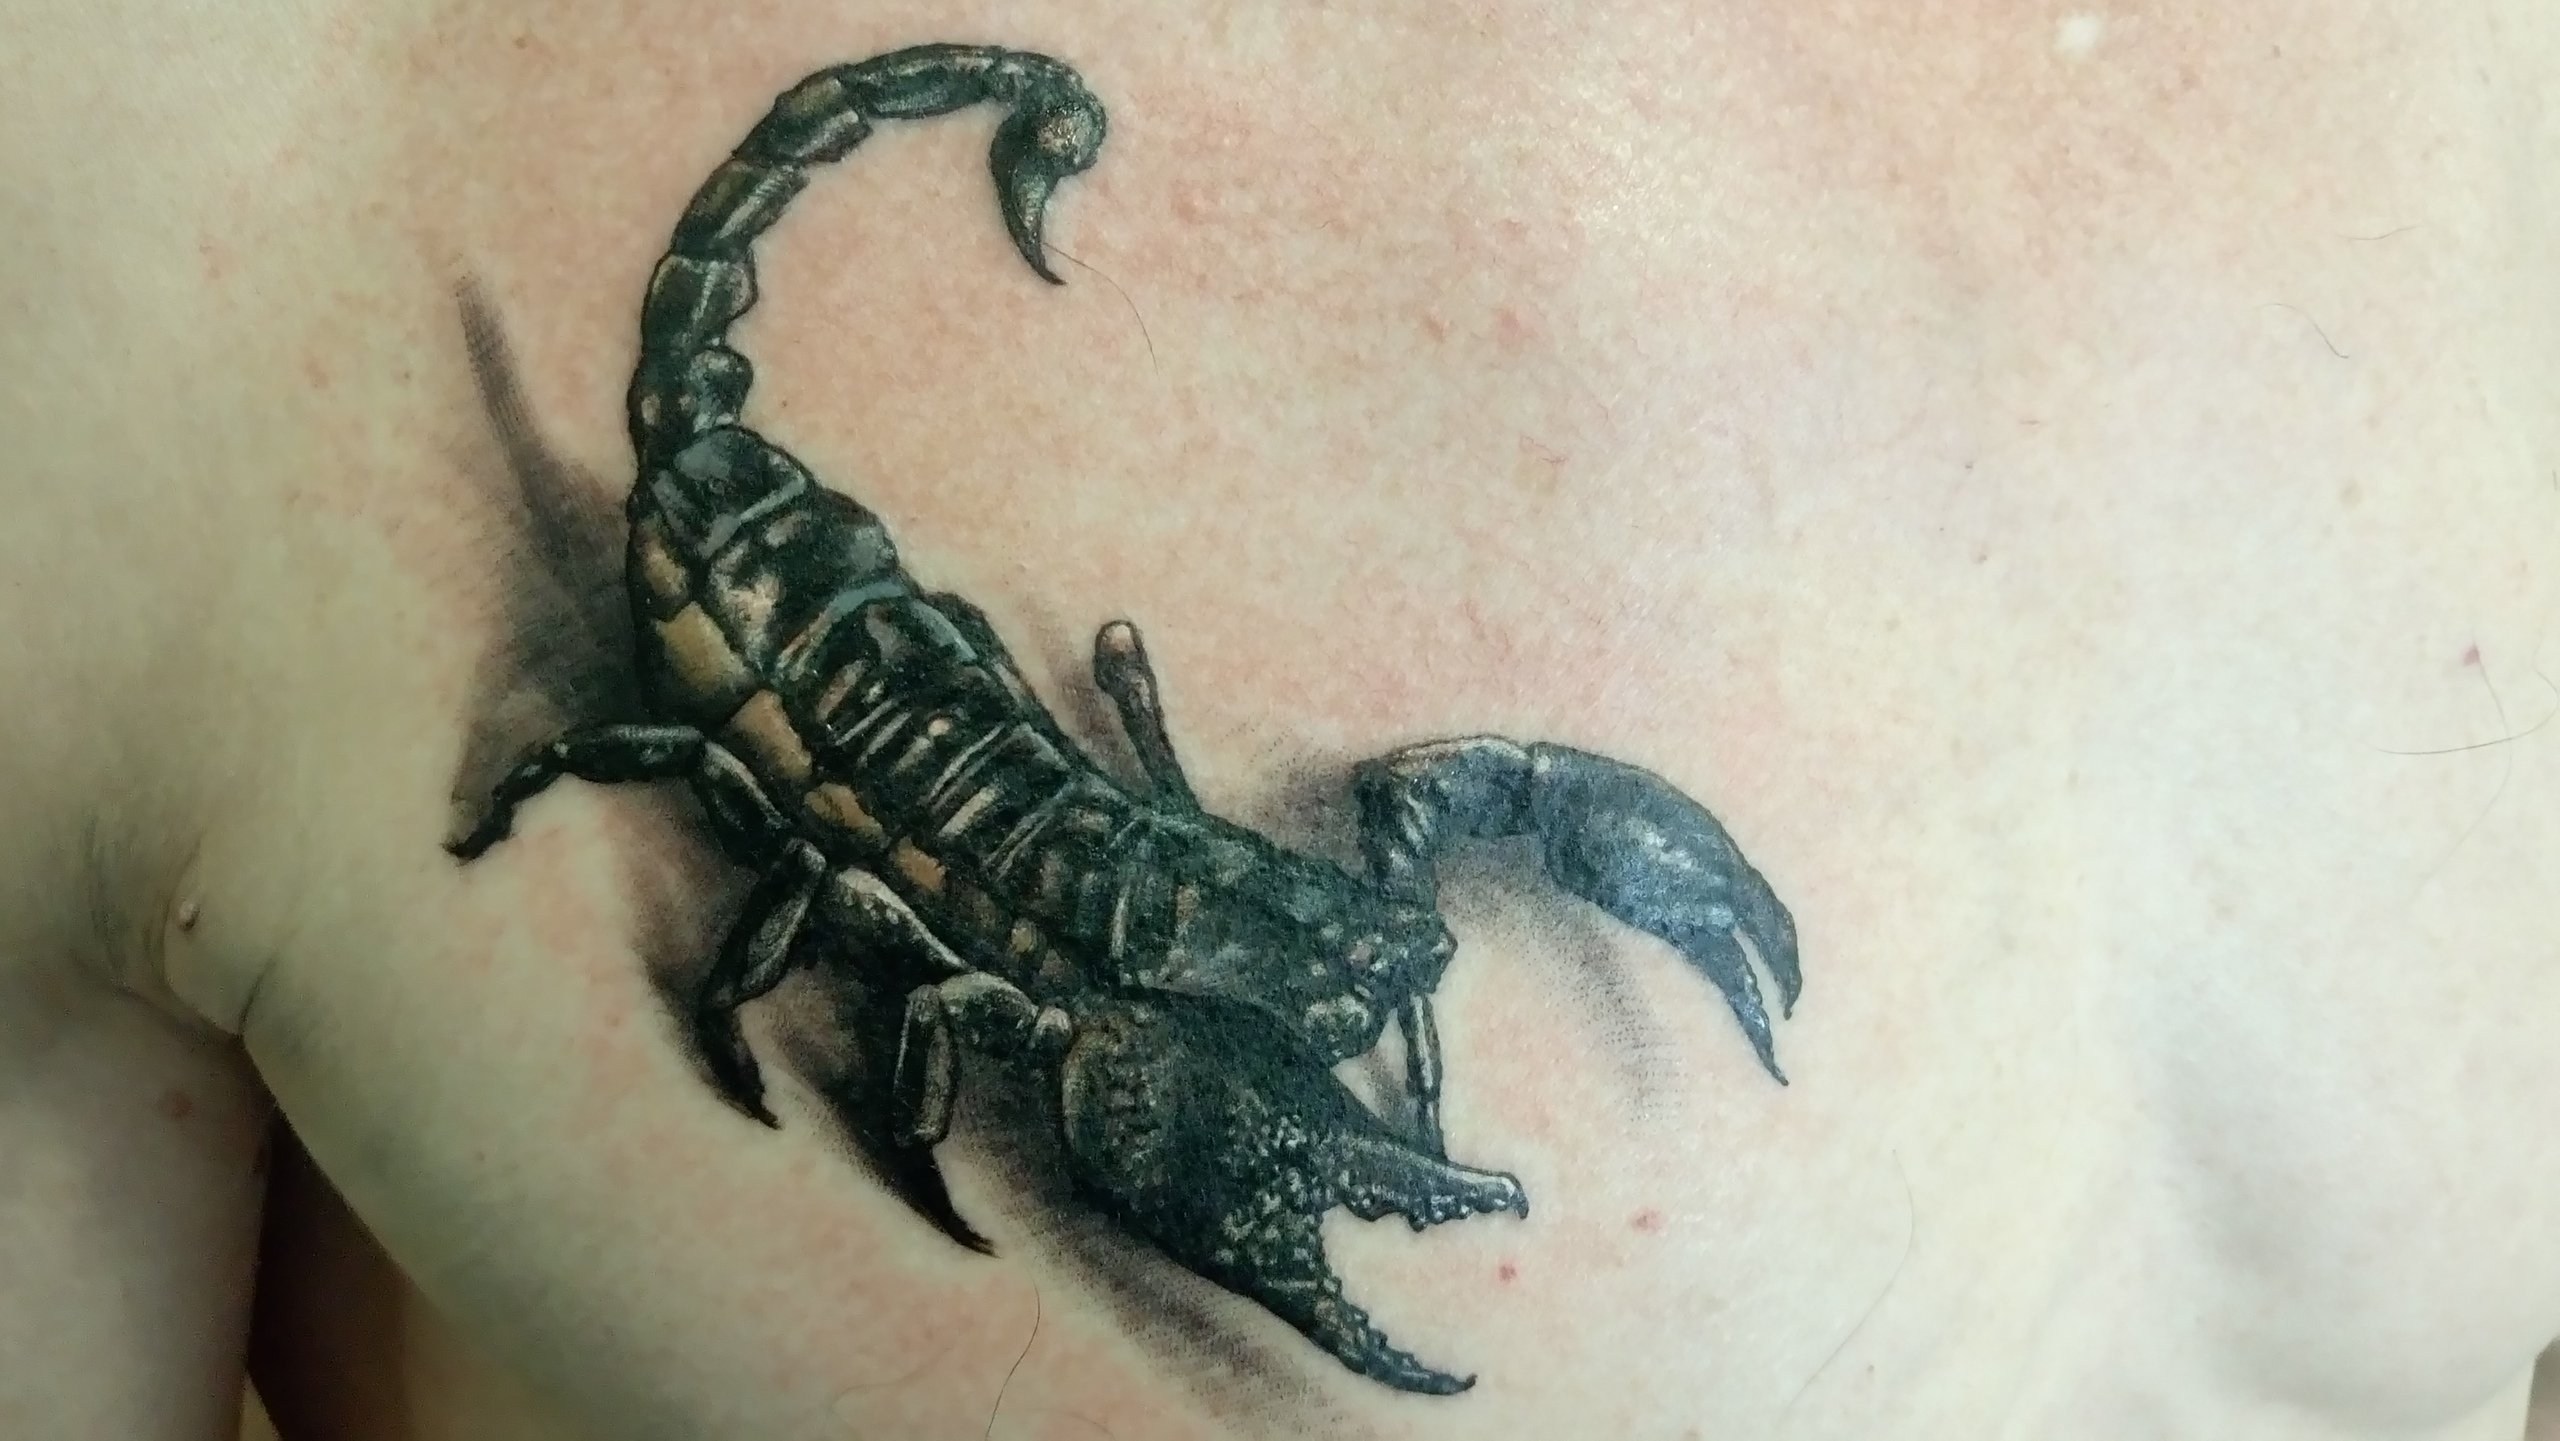 Tattoo Porn 18 - Porn in Krasnoyarsk with A Scorpion Tattoo (18 photos) - sex eporner pics